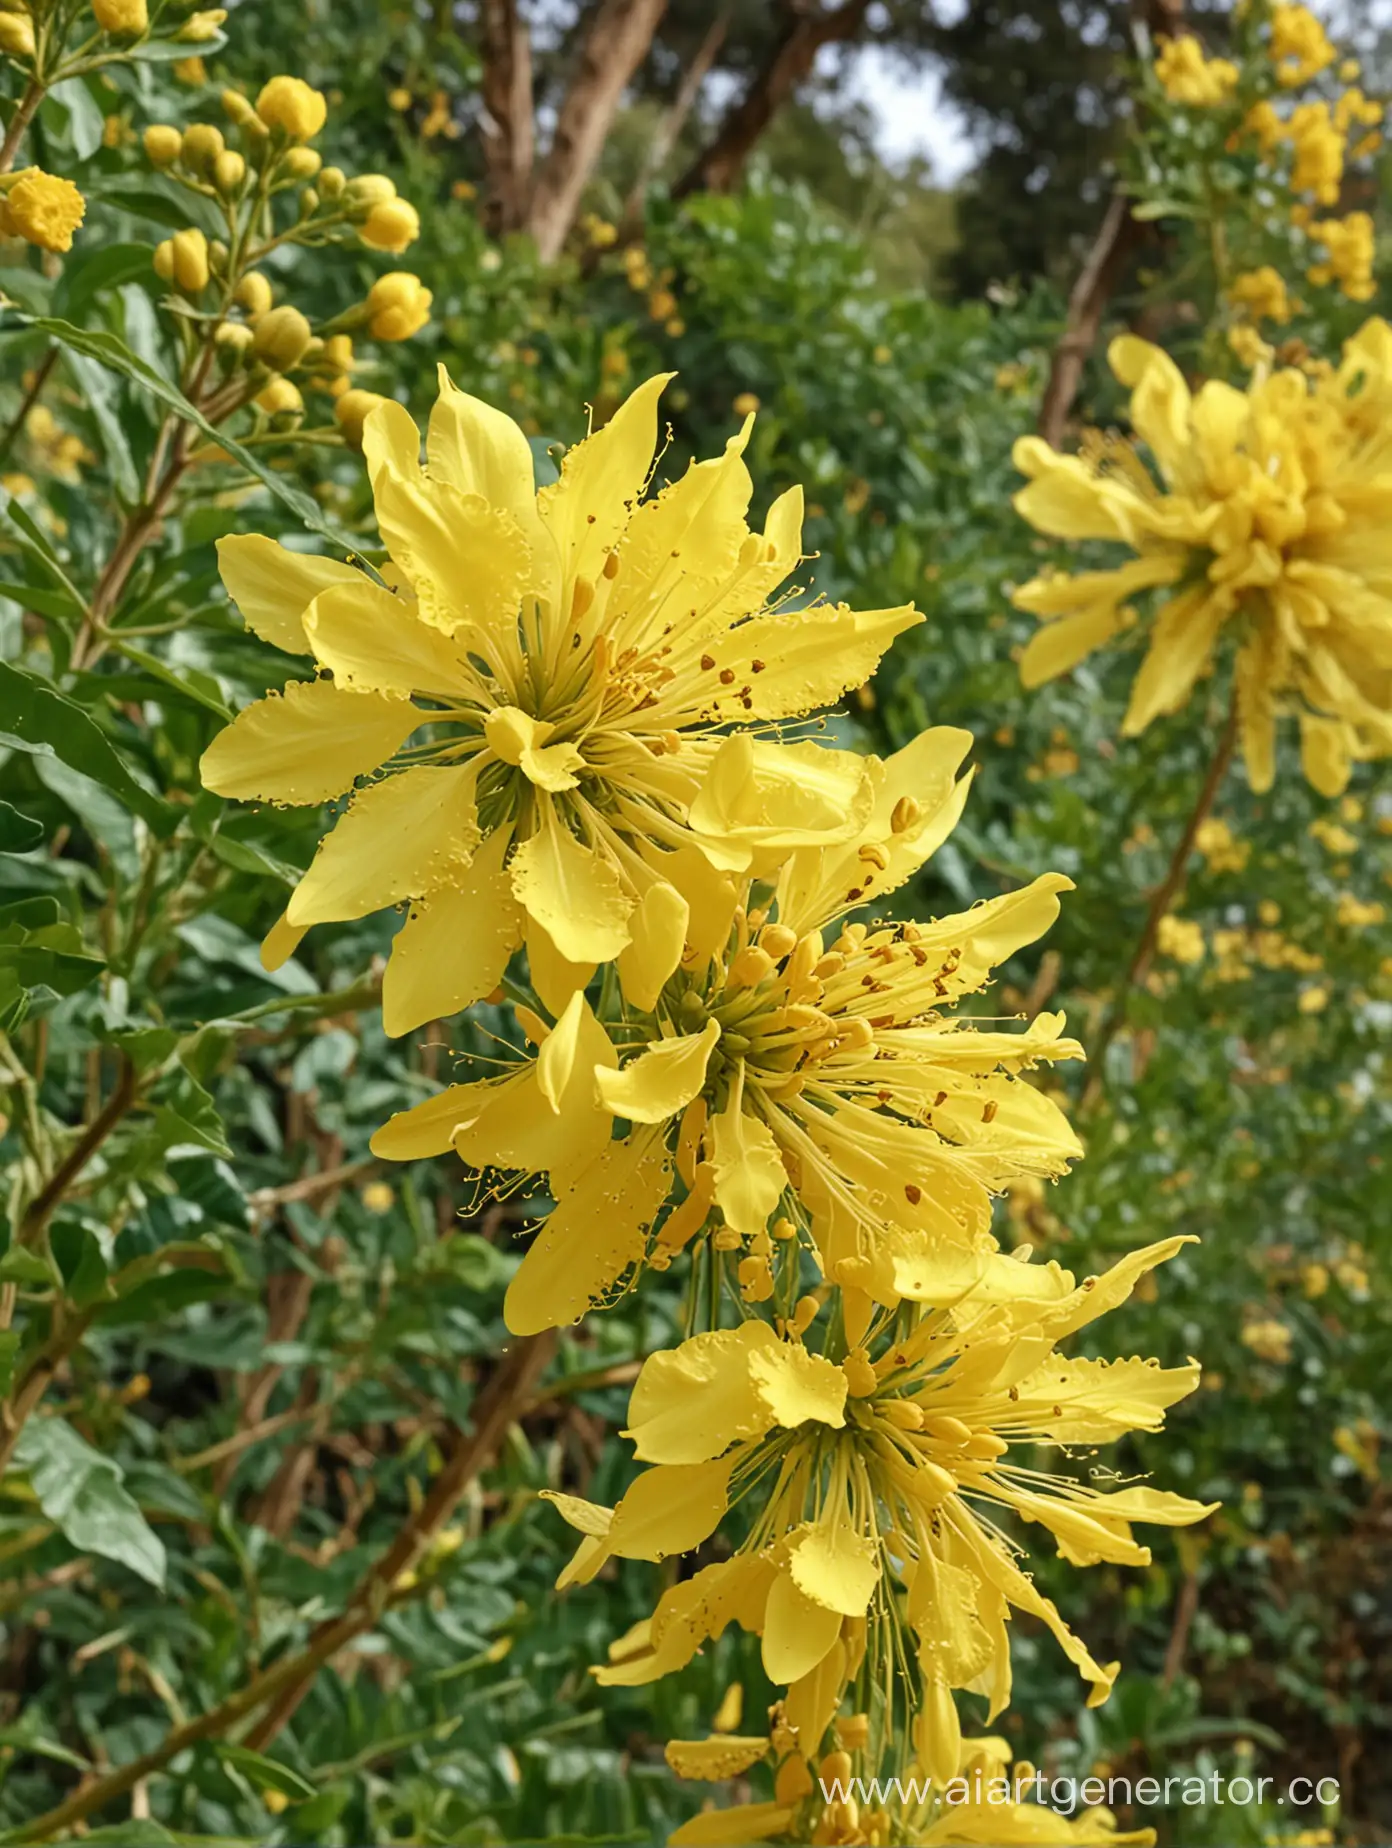 Vibrant-Acacia-Yellow-Flower-Amid-Lush-Greenery-Stunning-CloseUp-Shot-in-8K-Resolution